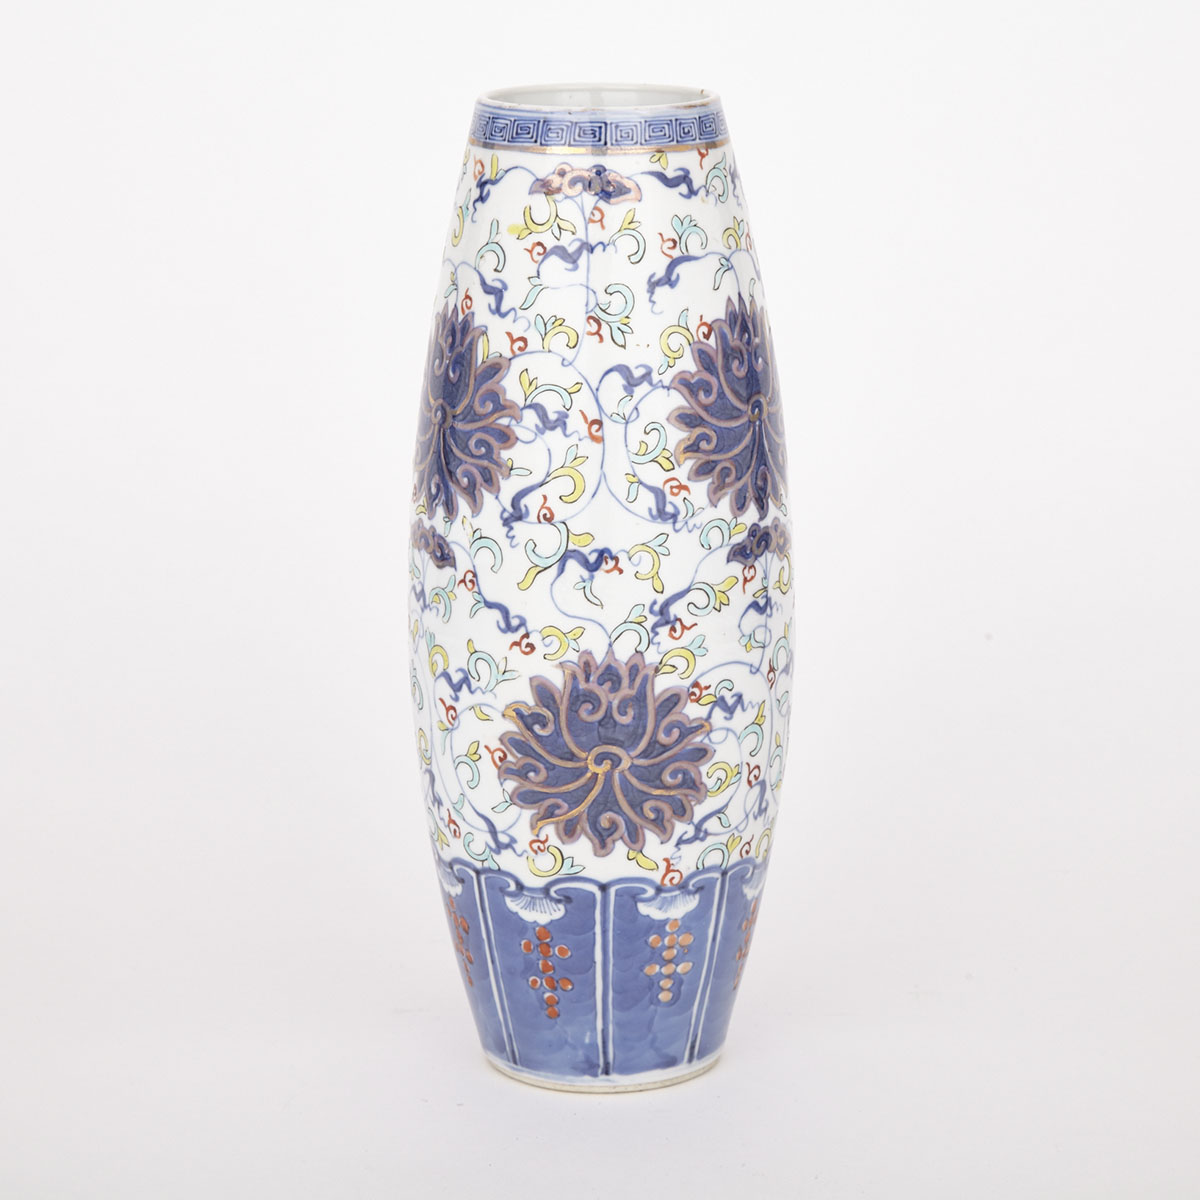 Lotus Vase, Qing Dynasty